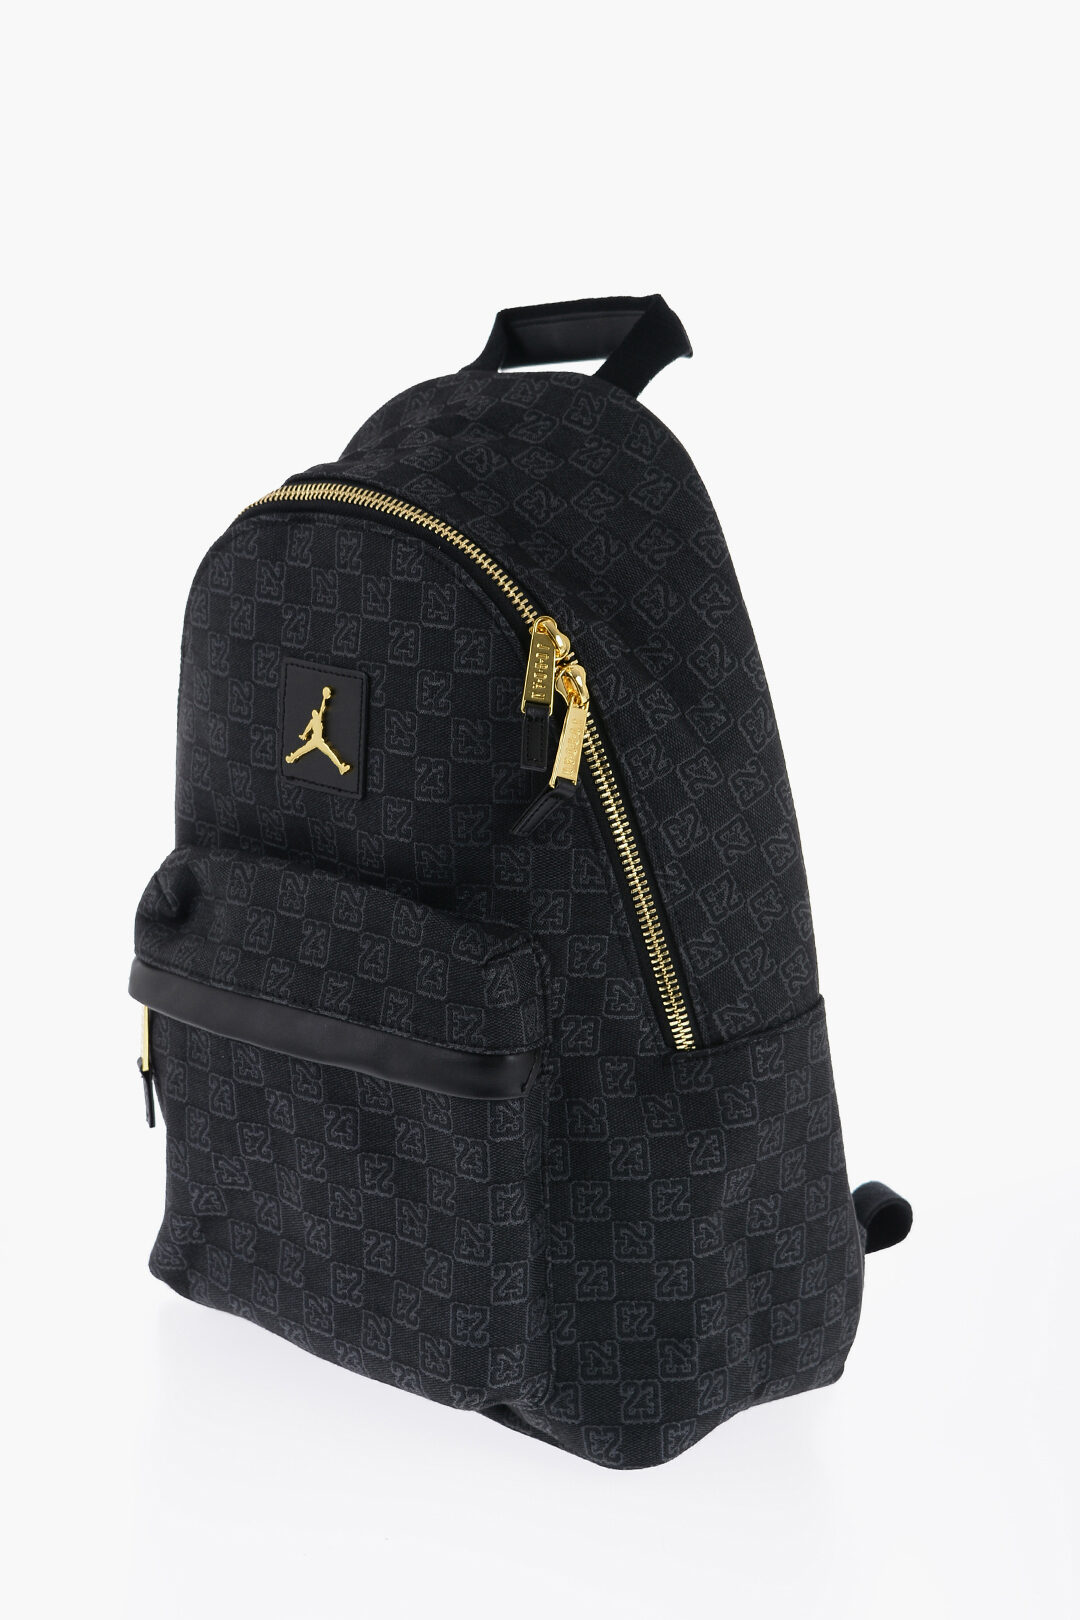 Nike AIR JORDAN Monogram Backpack with Golden Details unisex men ...